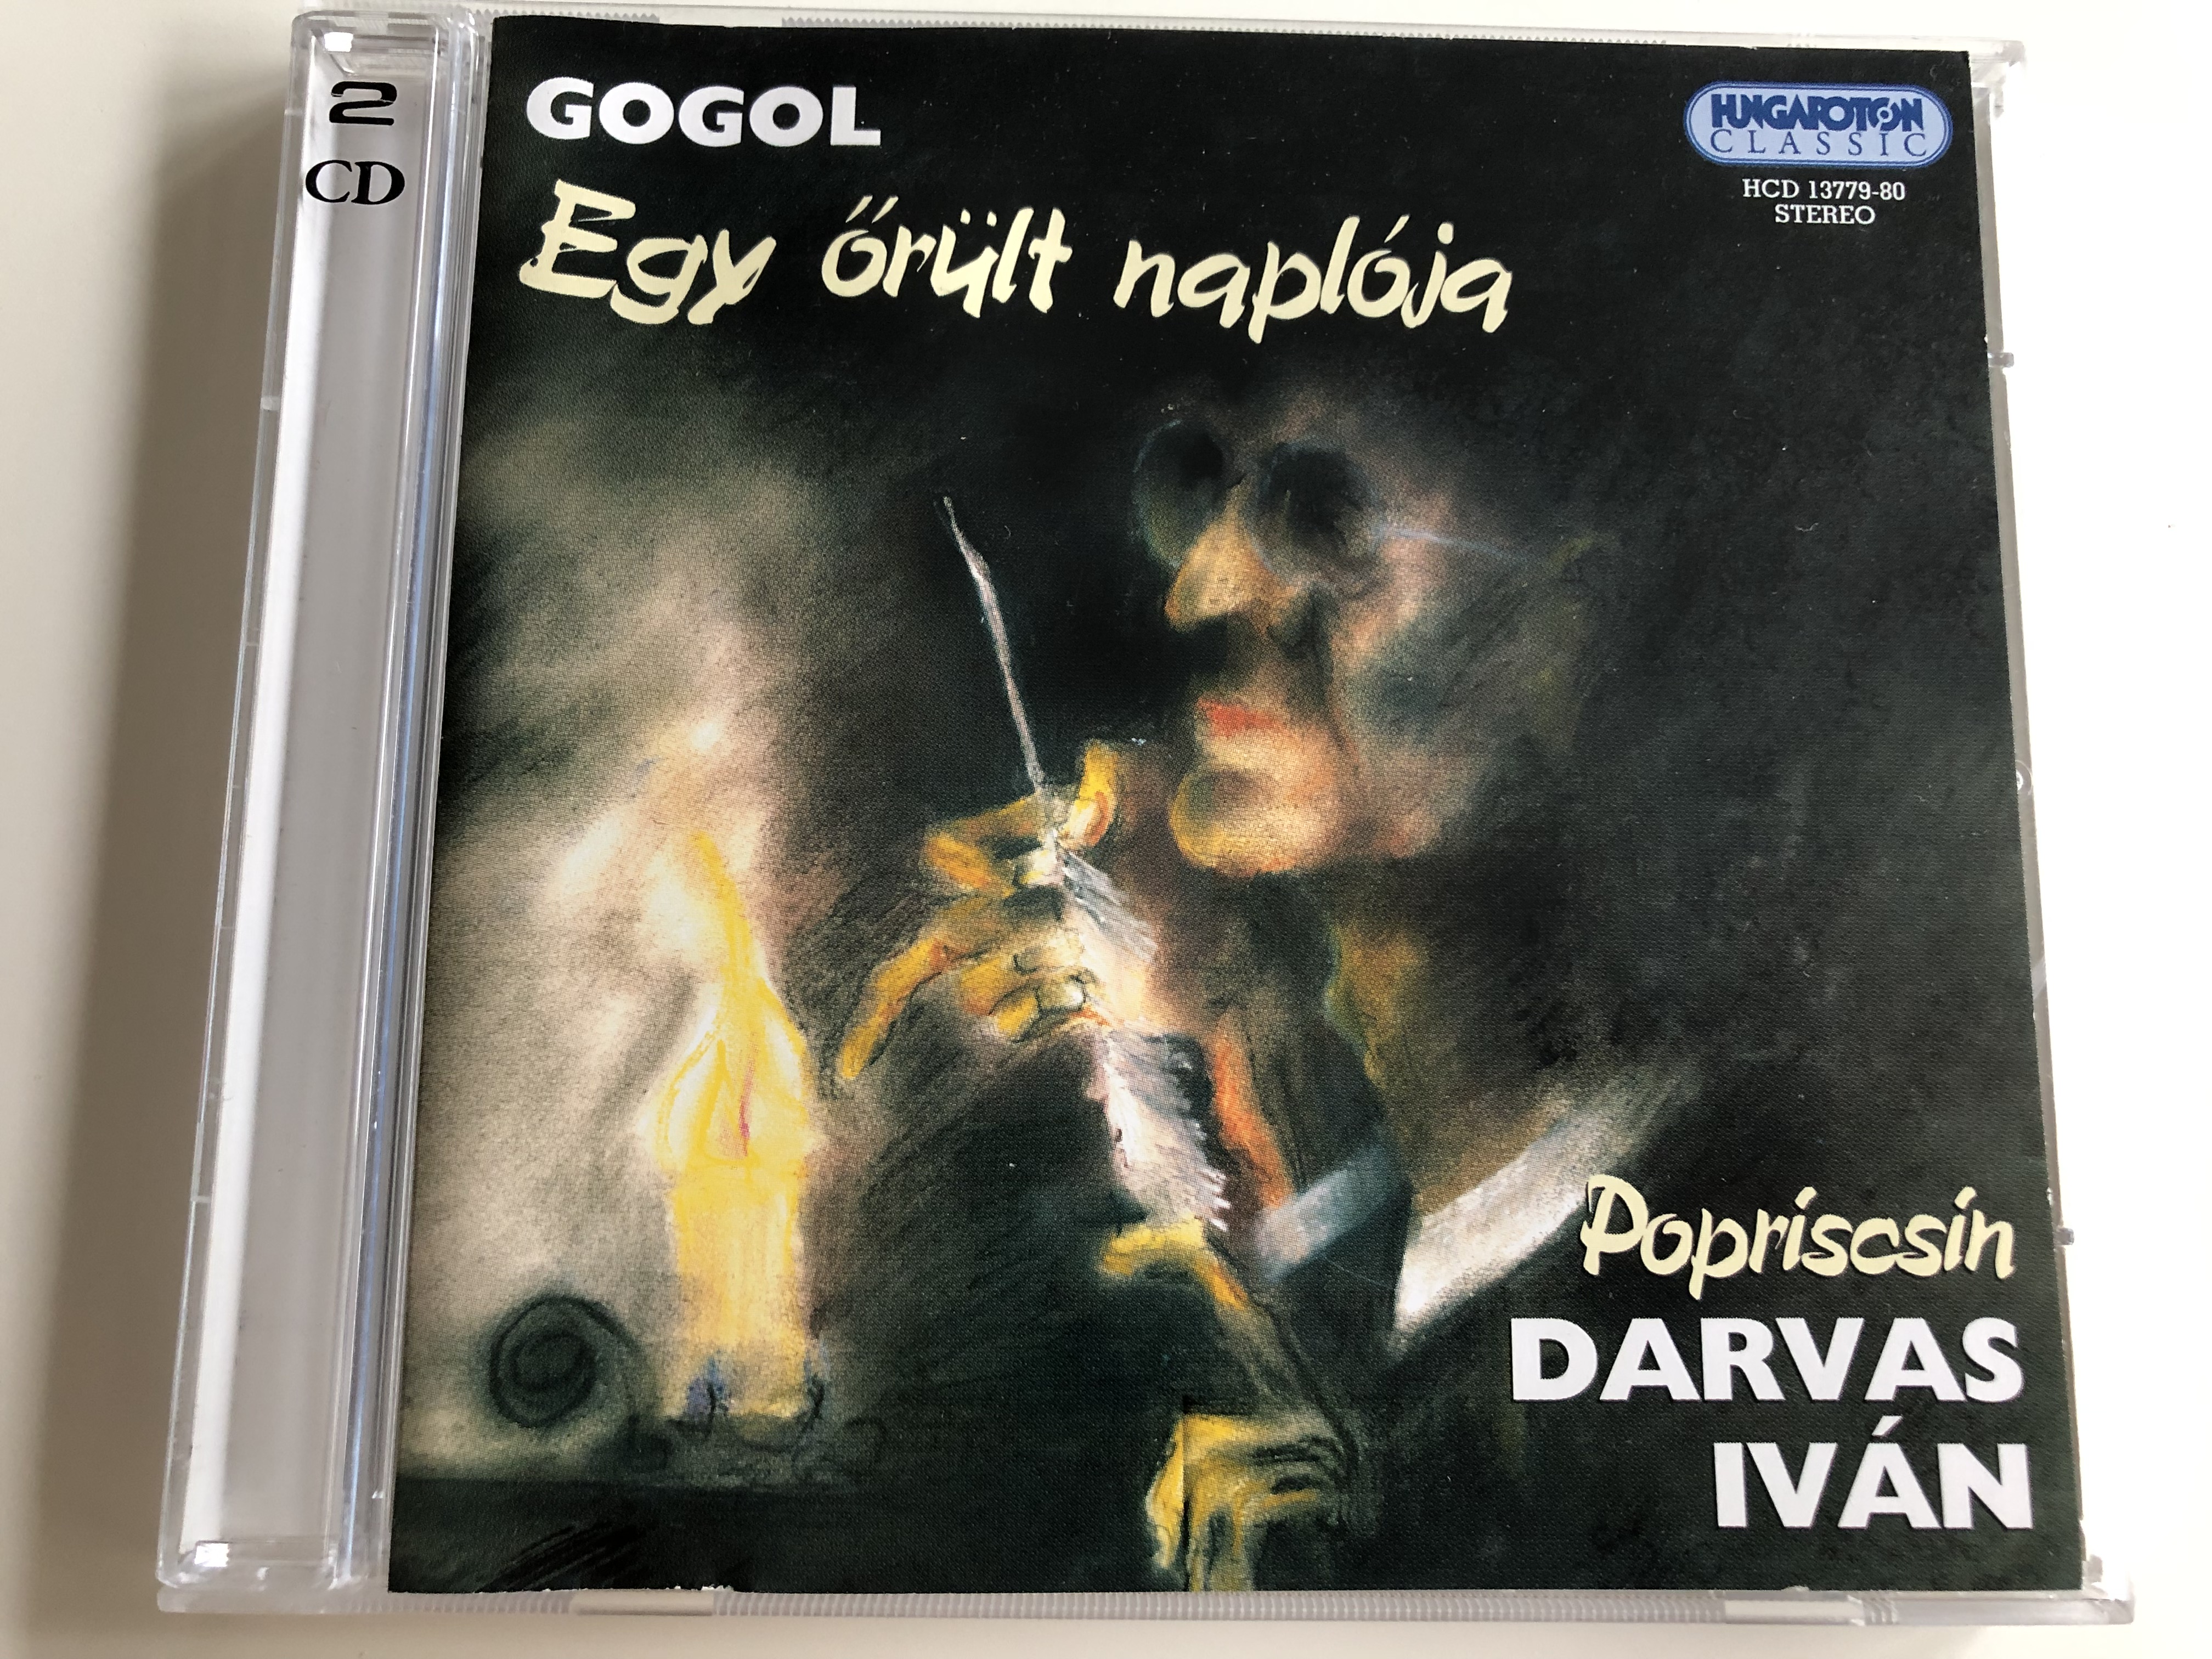 gogol-egy-r-lt-napl-ja-popriscsindarvas-iv-n-hungarian-radio-and-tv-chamber-orchestra-conducted-by-frigyes-r-na-hungaroton-classic-hcd-13779-80-2cd-1-.jpg